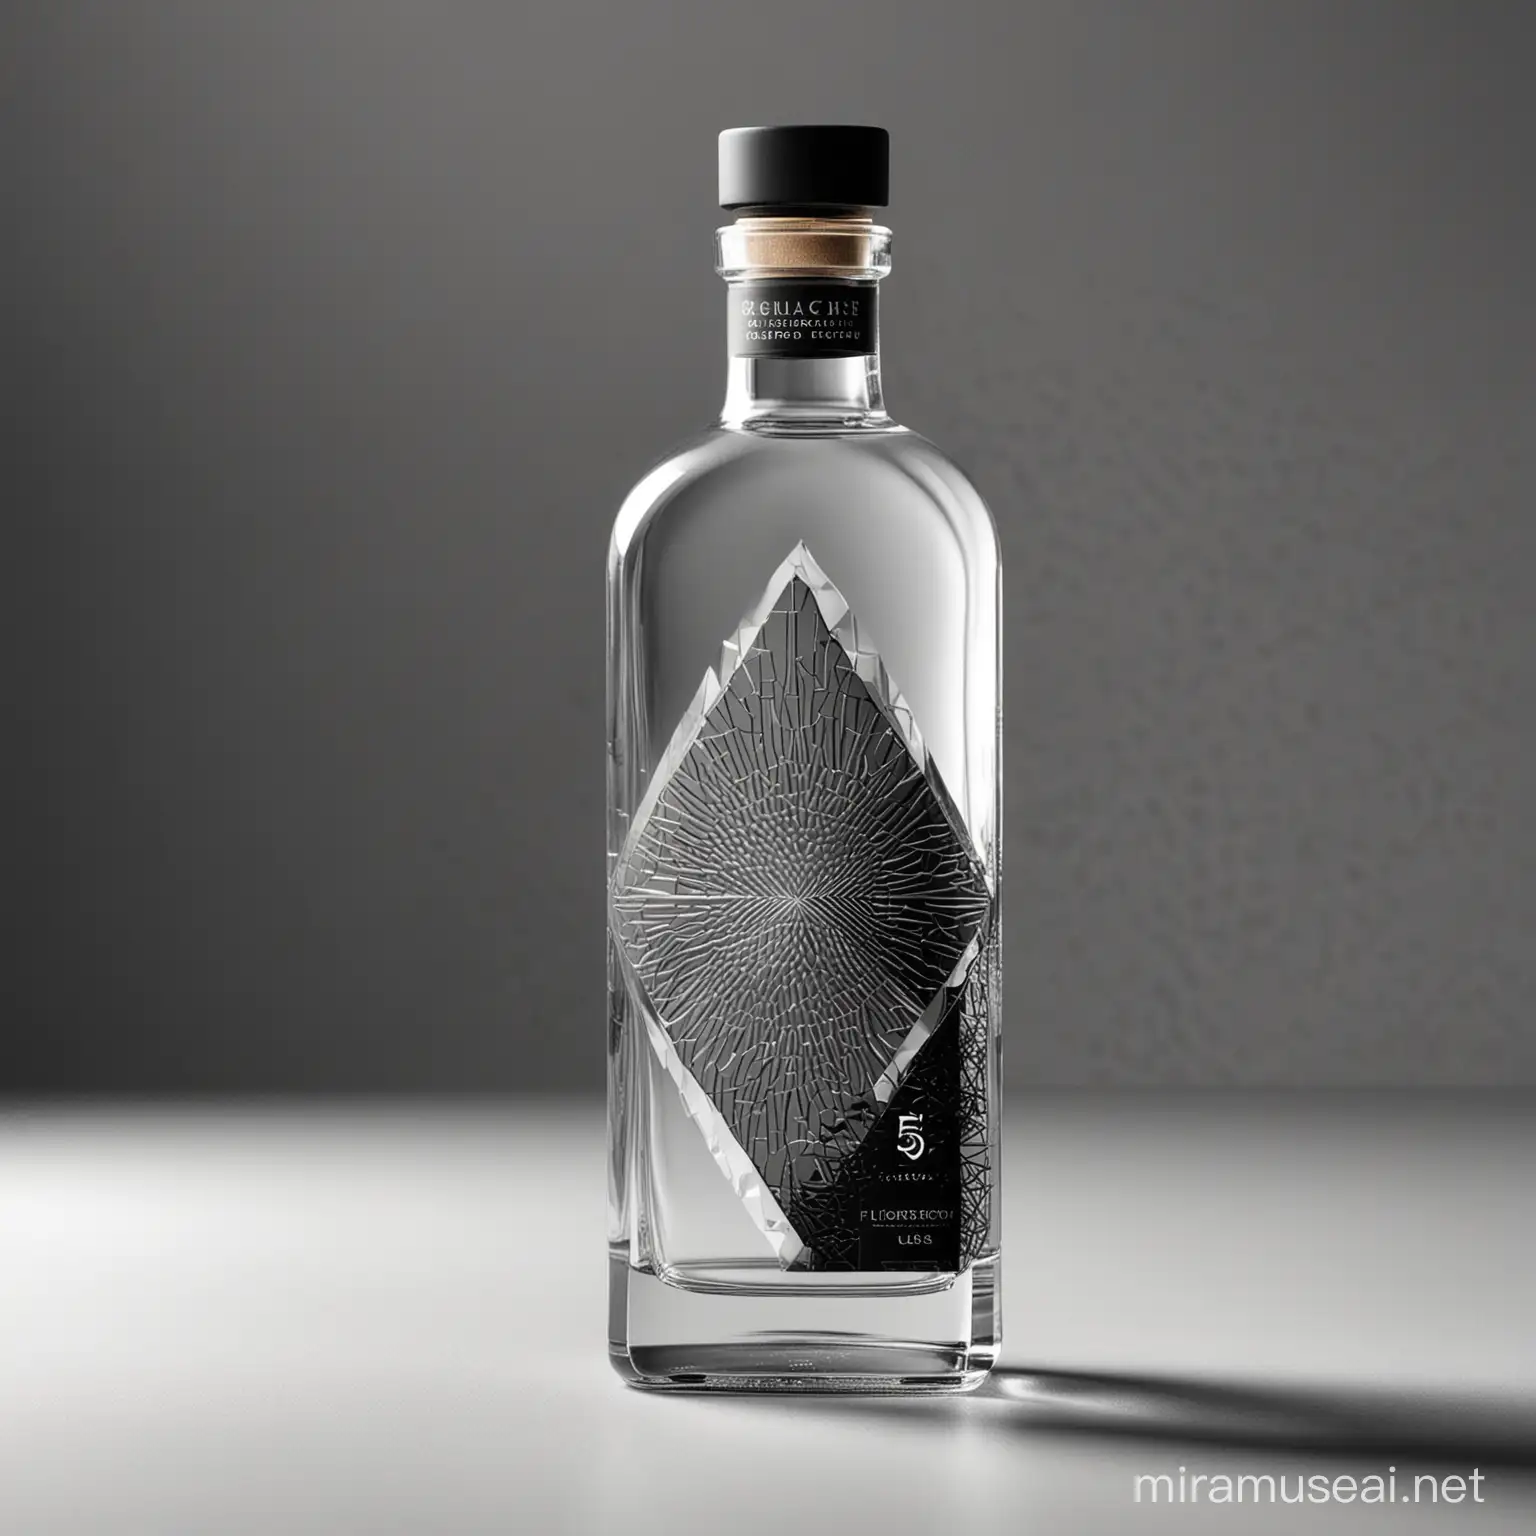 Modern health liquor packaging design, high end liquor, 500 ml glass bottle, photograph images, high details, silver and black geometric texture, brand name is Octane